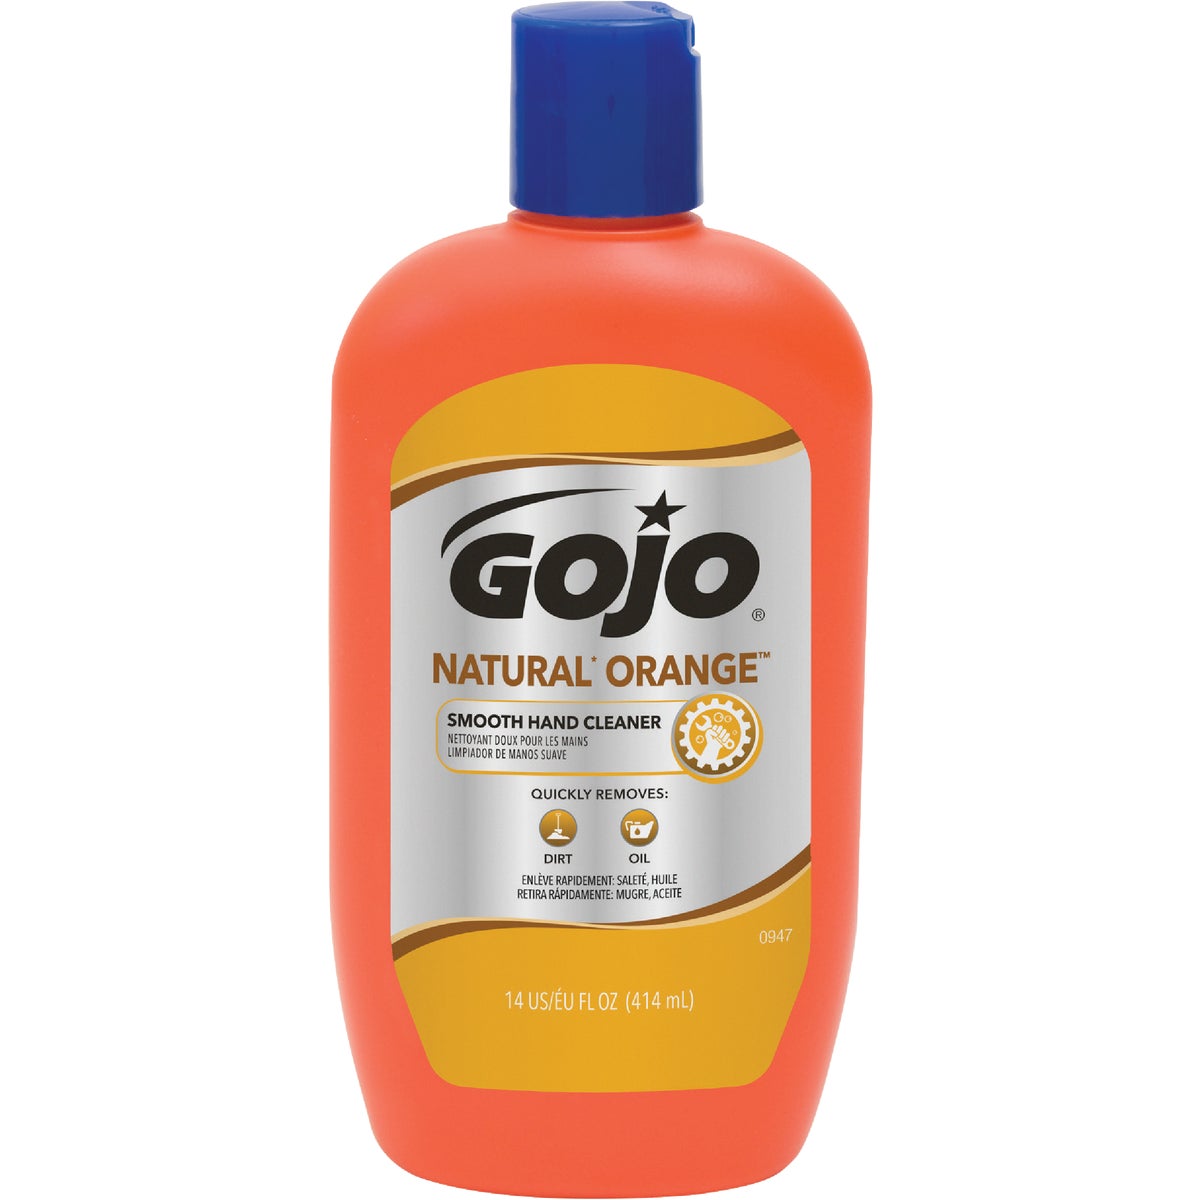 GOJO Natural Orange 14 Oz. Smooth Hand Cleaner